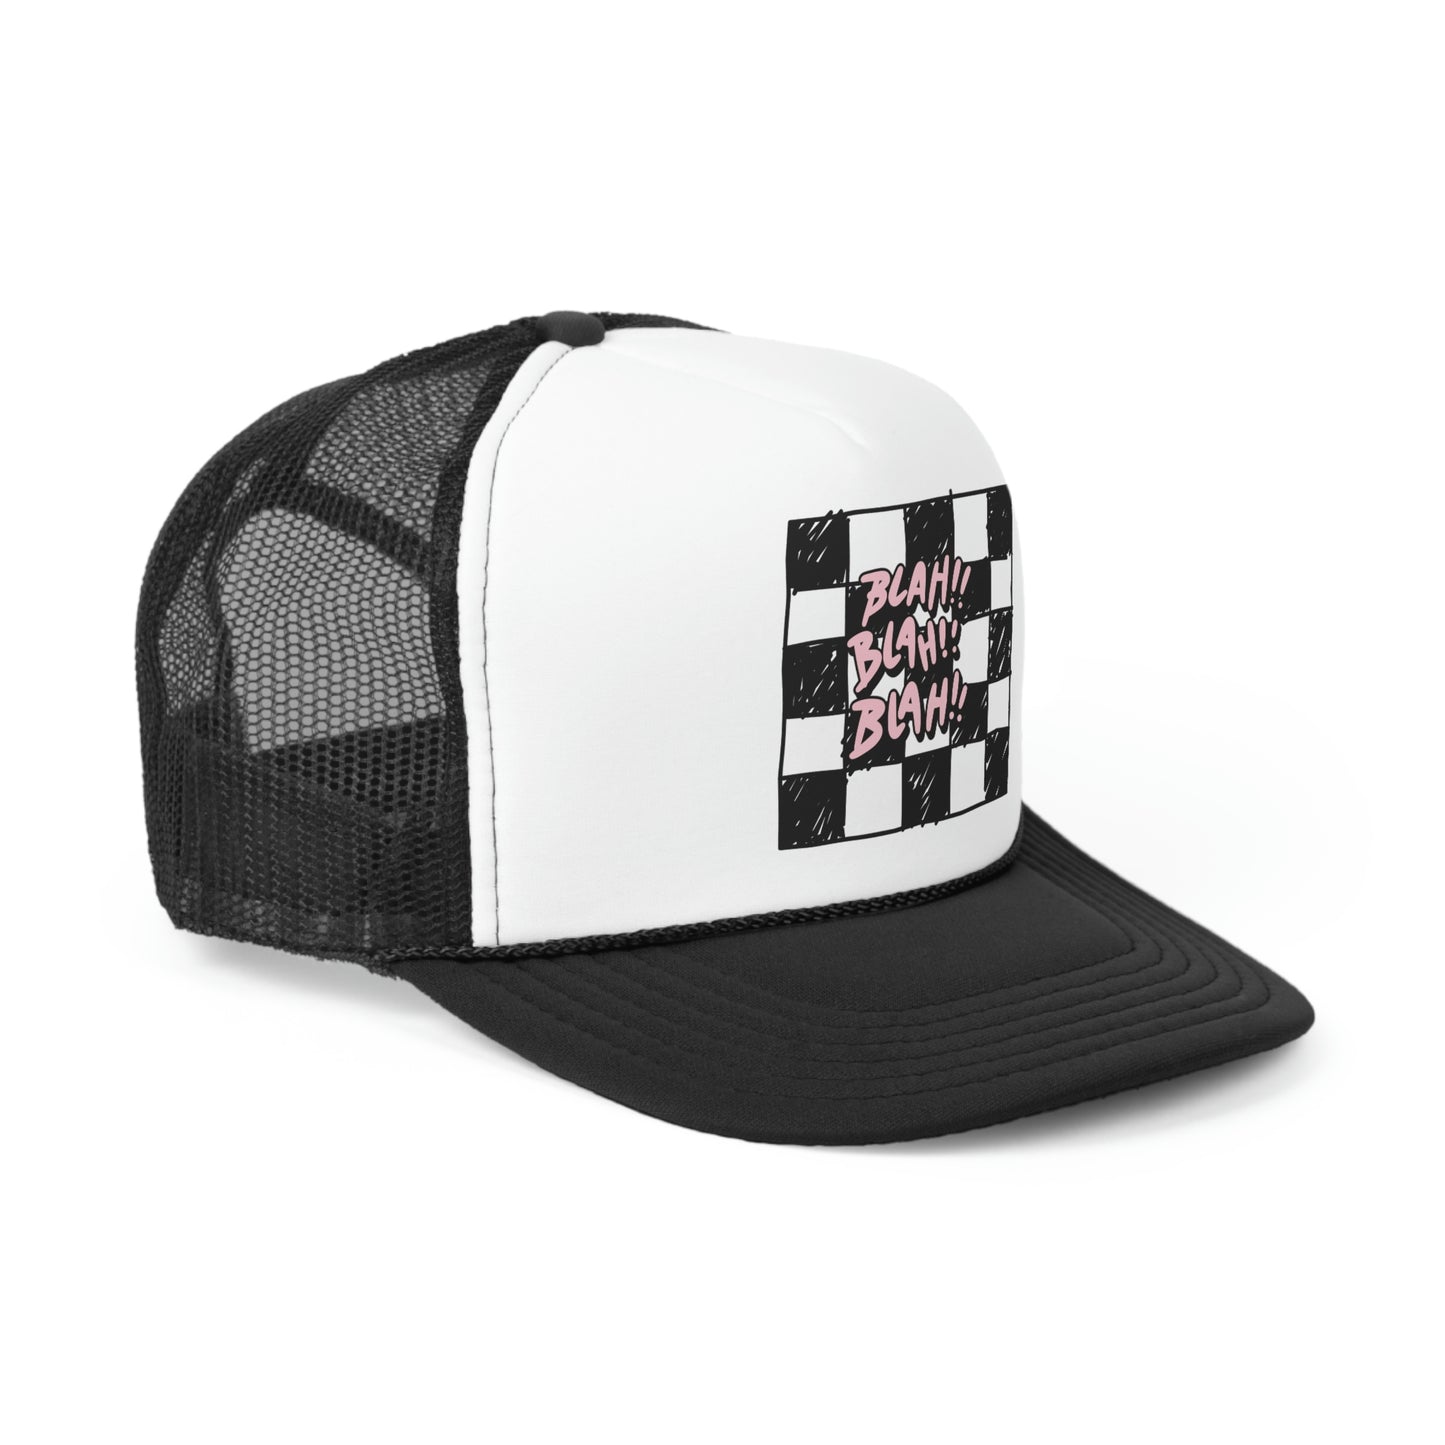 Blah Blah Blah Checkered Trucker Hat